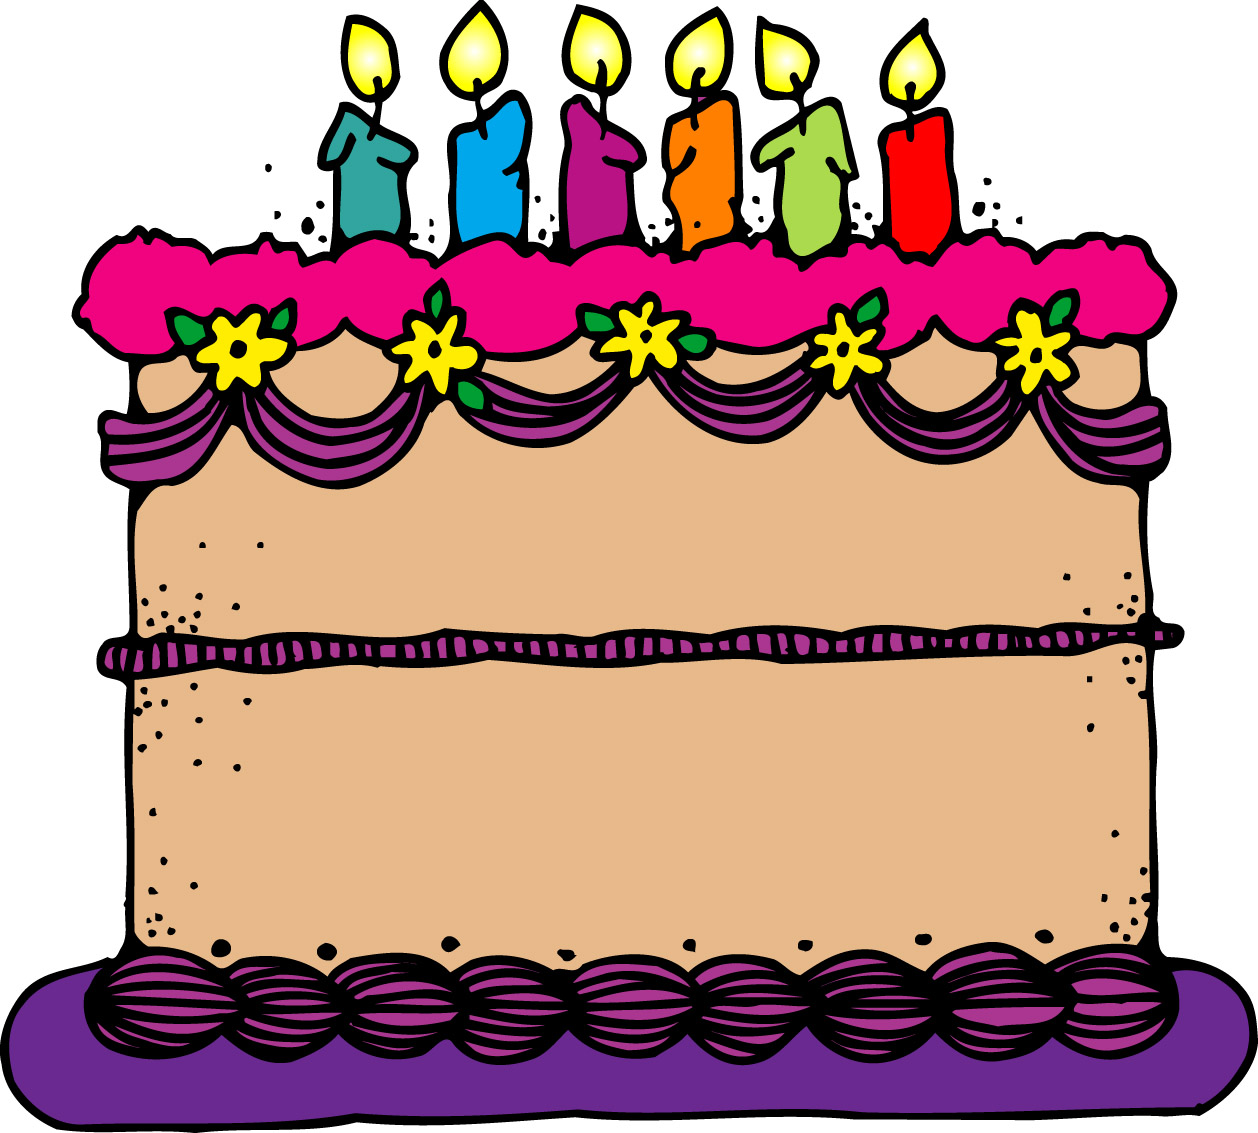 Birthday cake clip art free . - Clip Art Cakes